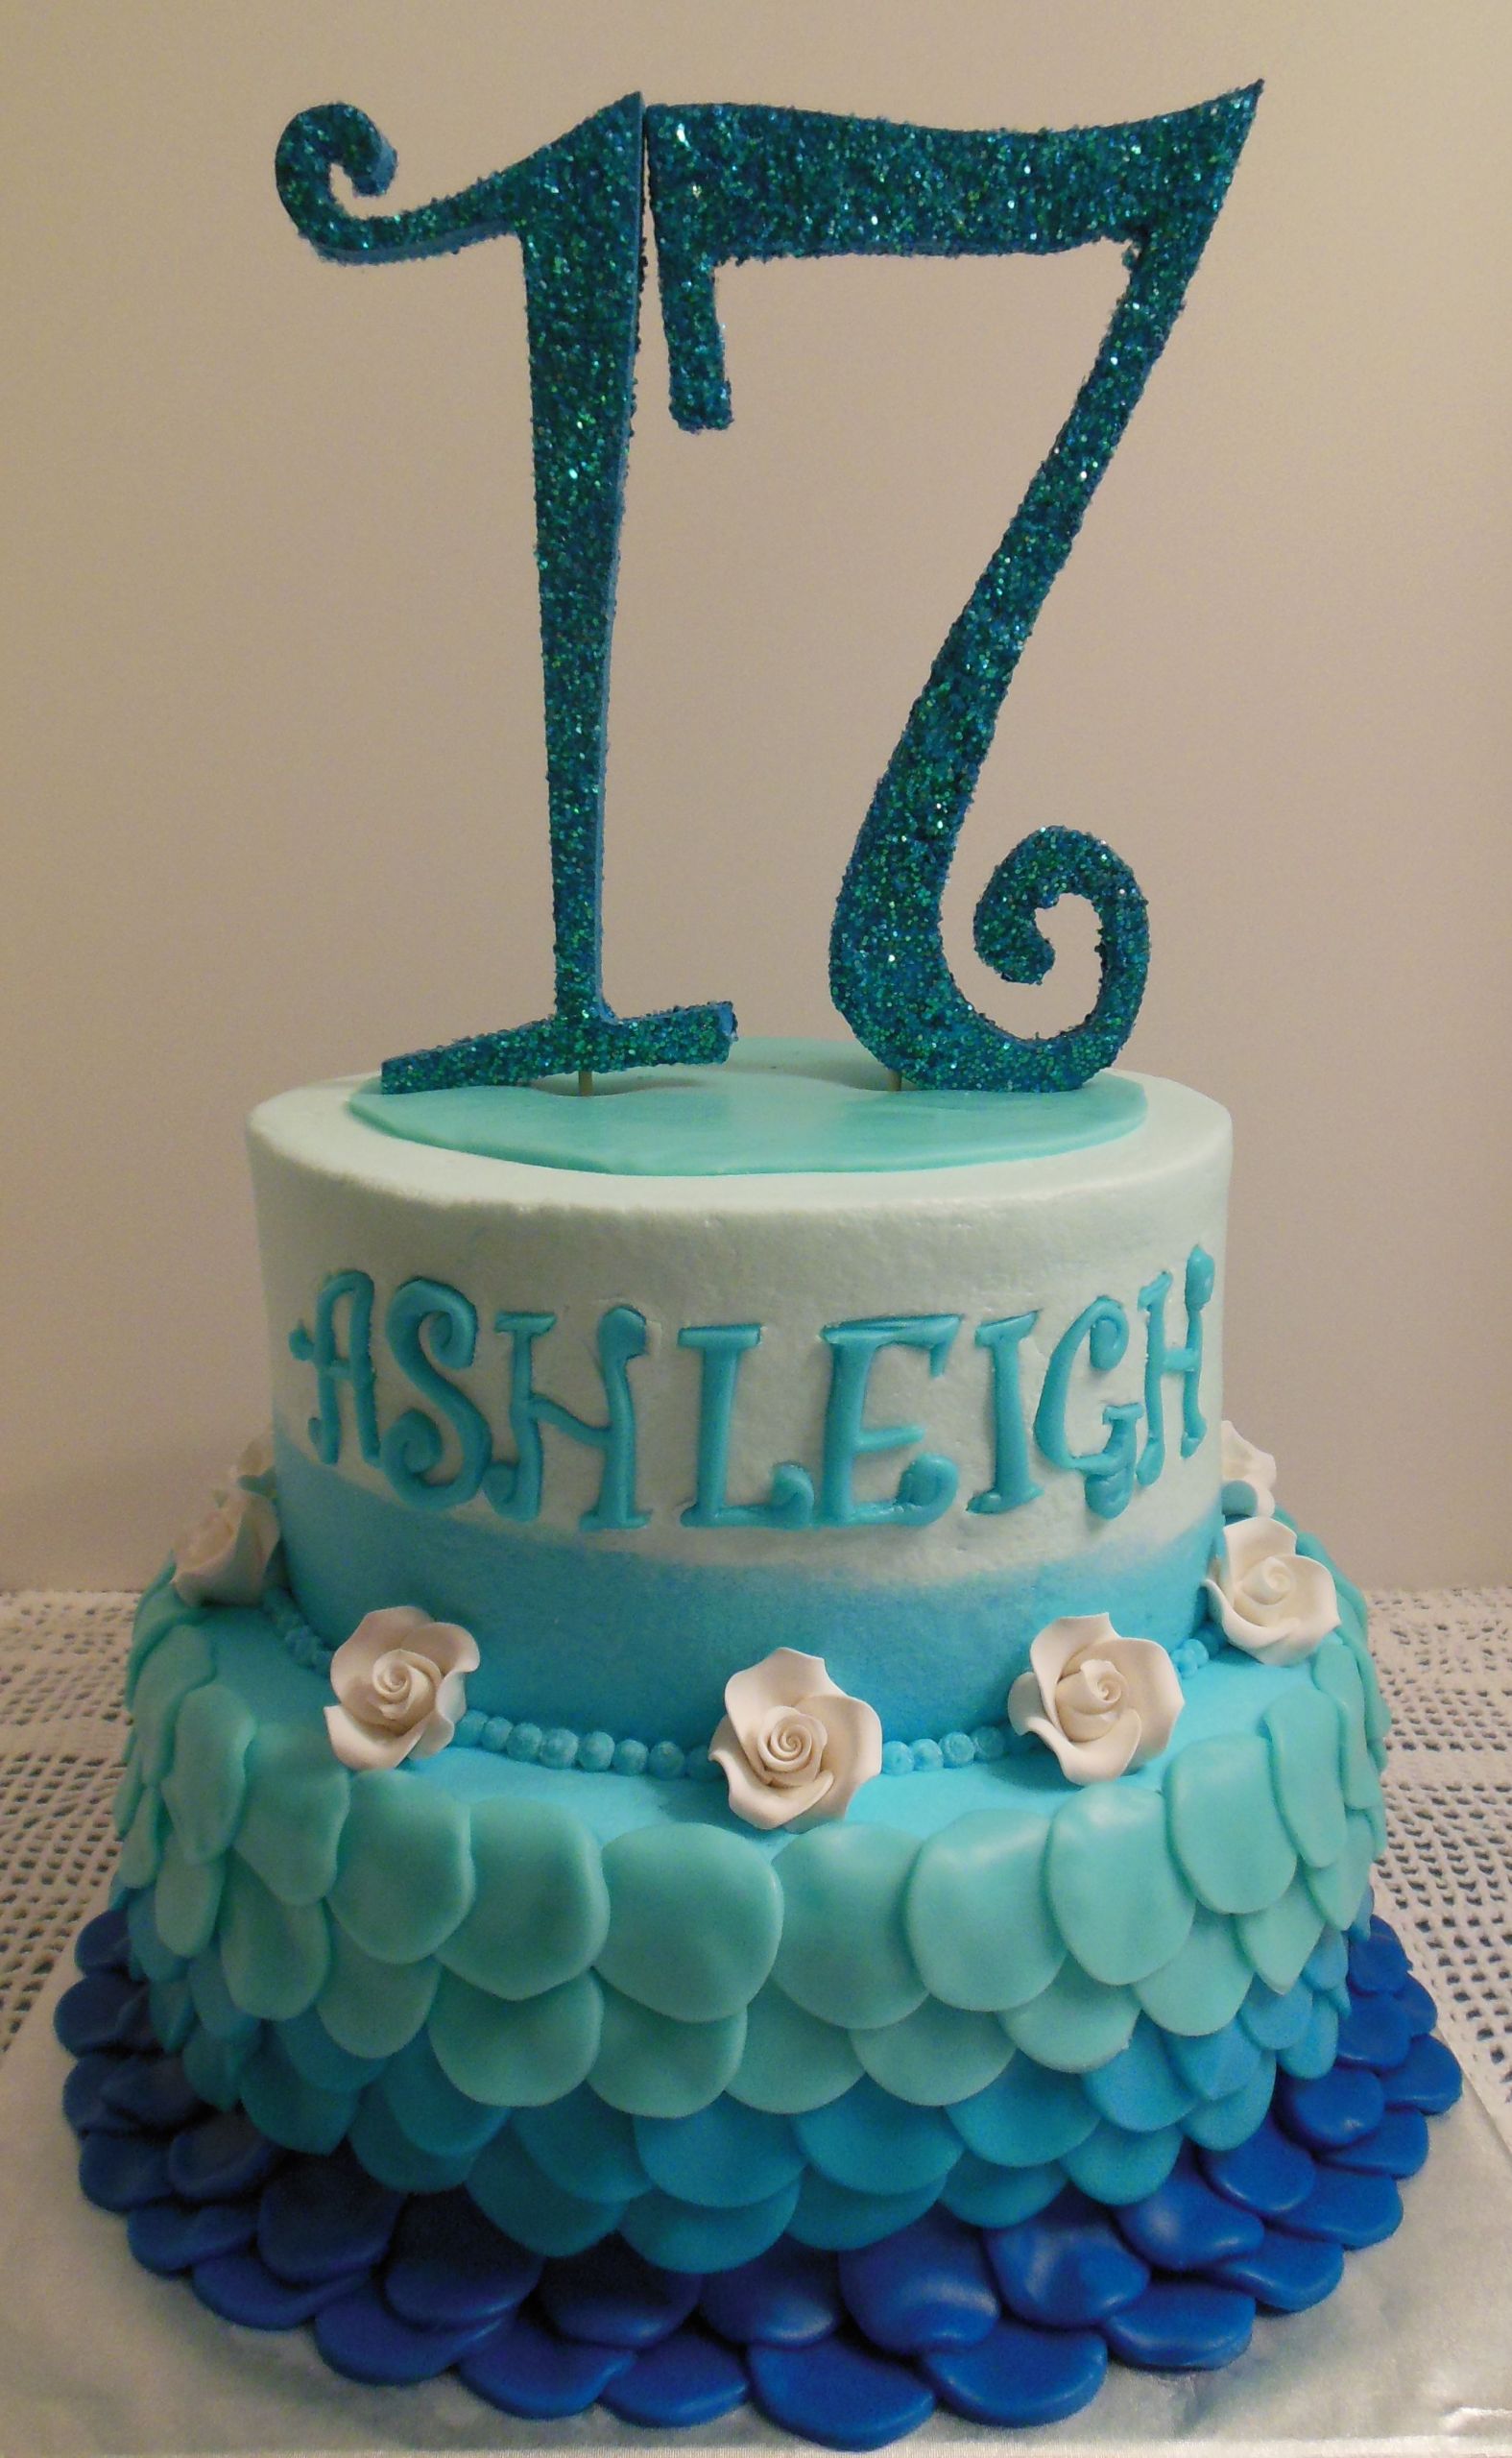 17 Year Old Boy Birthday Party Ideas
 Shades of Blue 17th Birthday Cake in 2019